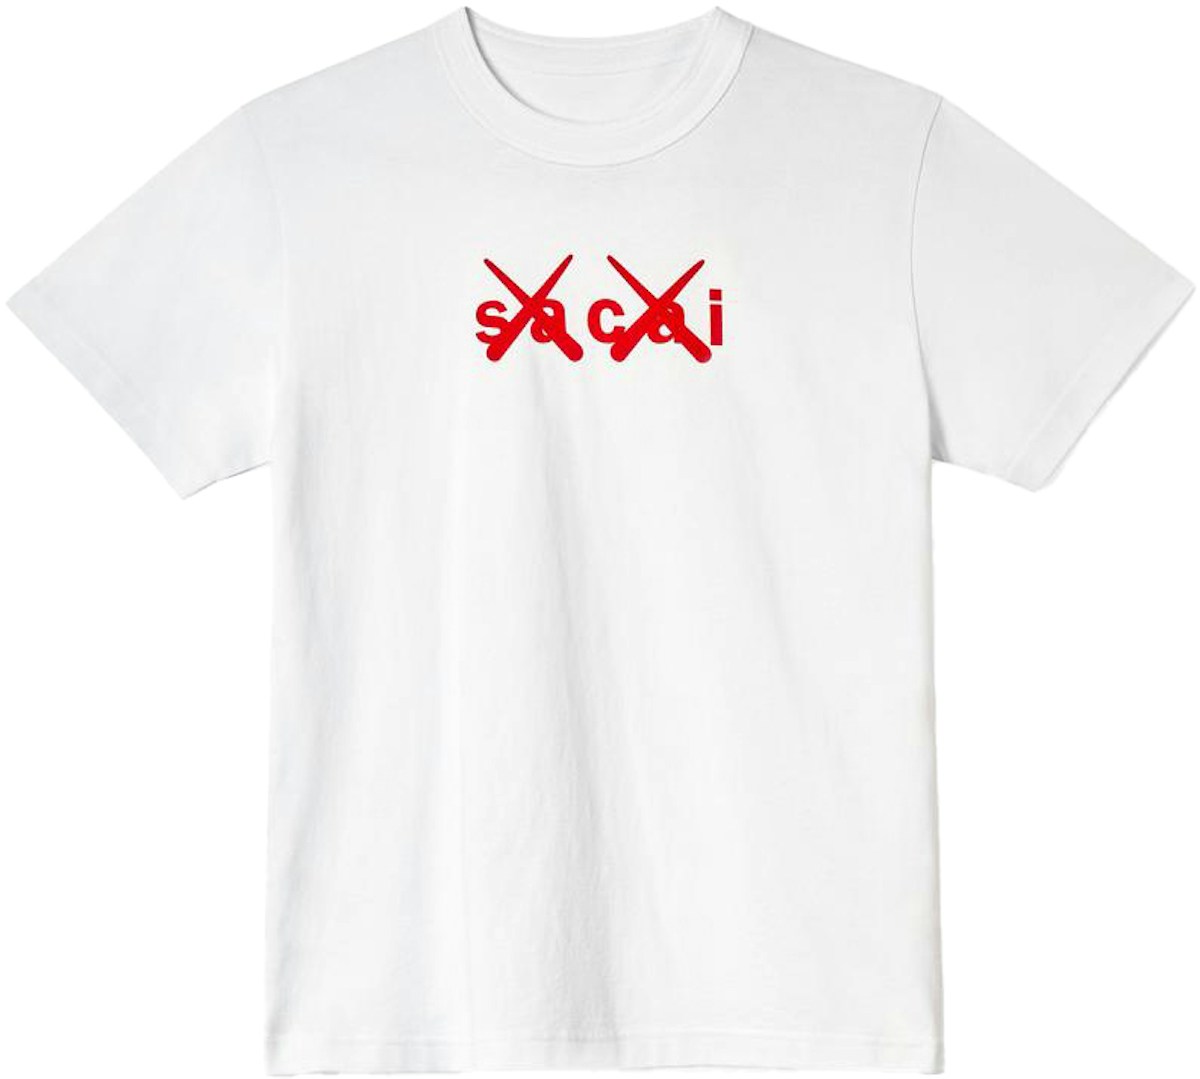 KAWS x Sacai Flock Print T-shirt White/Red - FW21